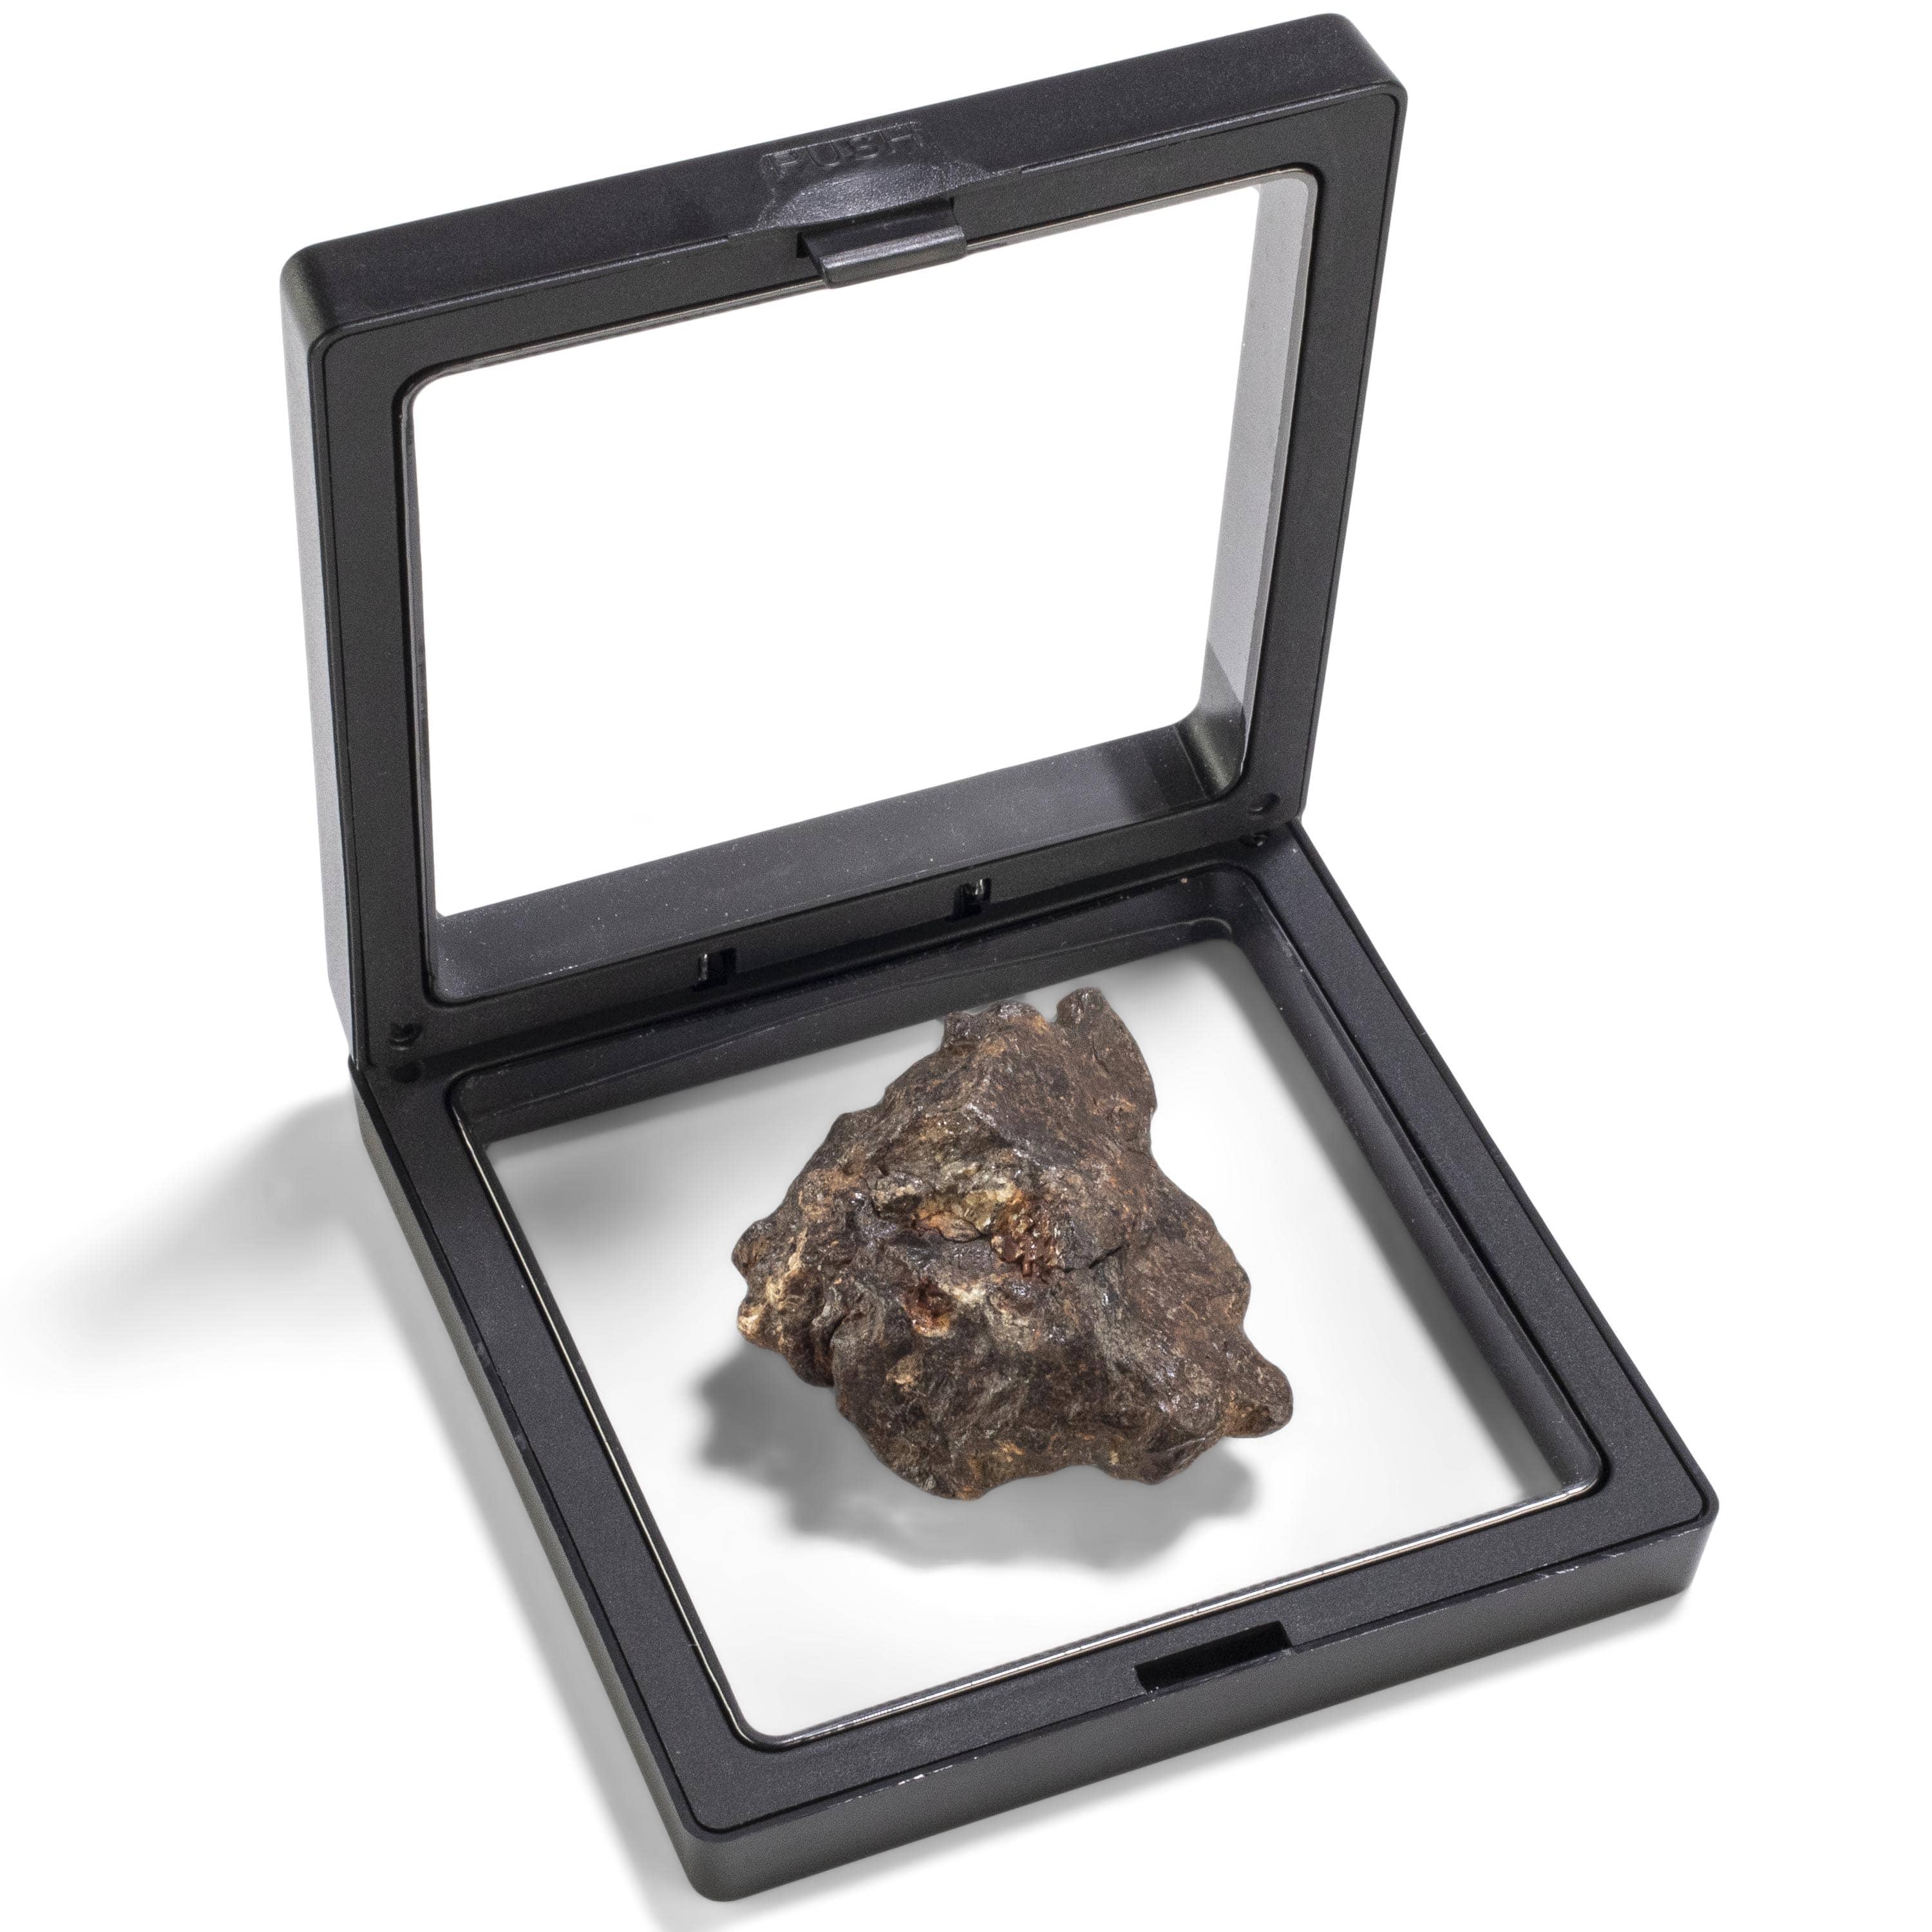 Kalifano Meteorites Sericho Iron Meteorite discovered in Kenya - 62.8 grams MTCHO1200.007